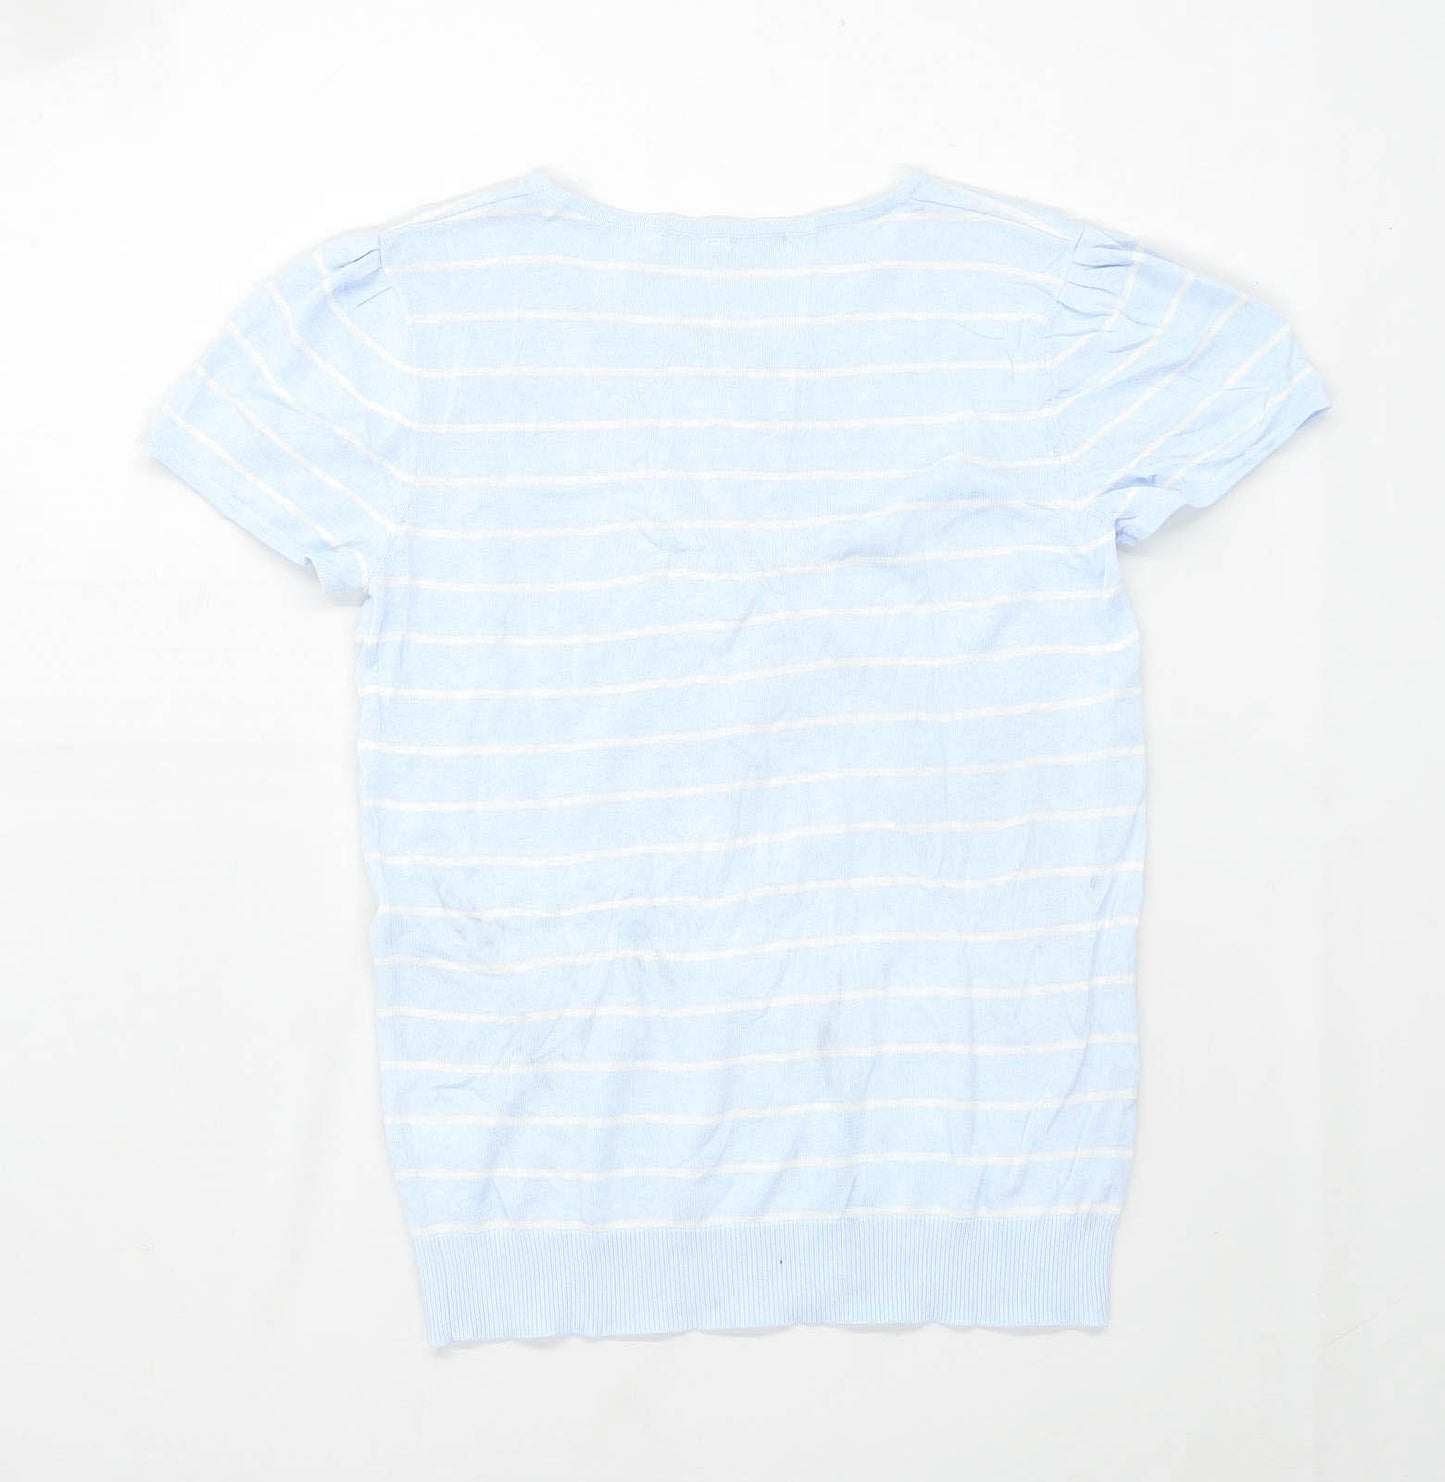 Uniqlo Womens Size S Striped Blue Top (Regular)